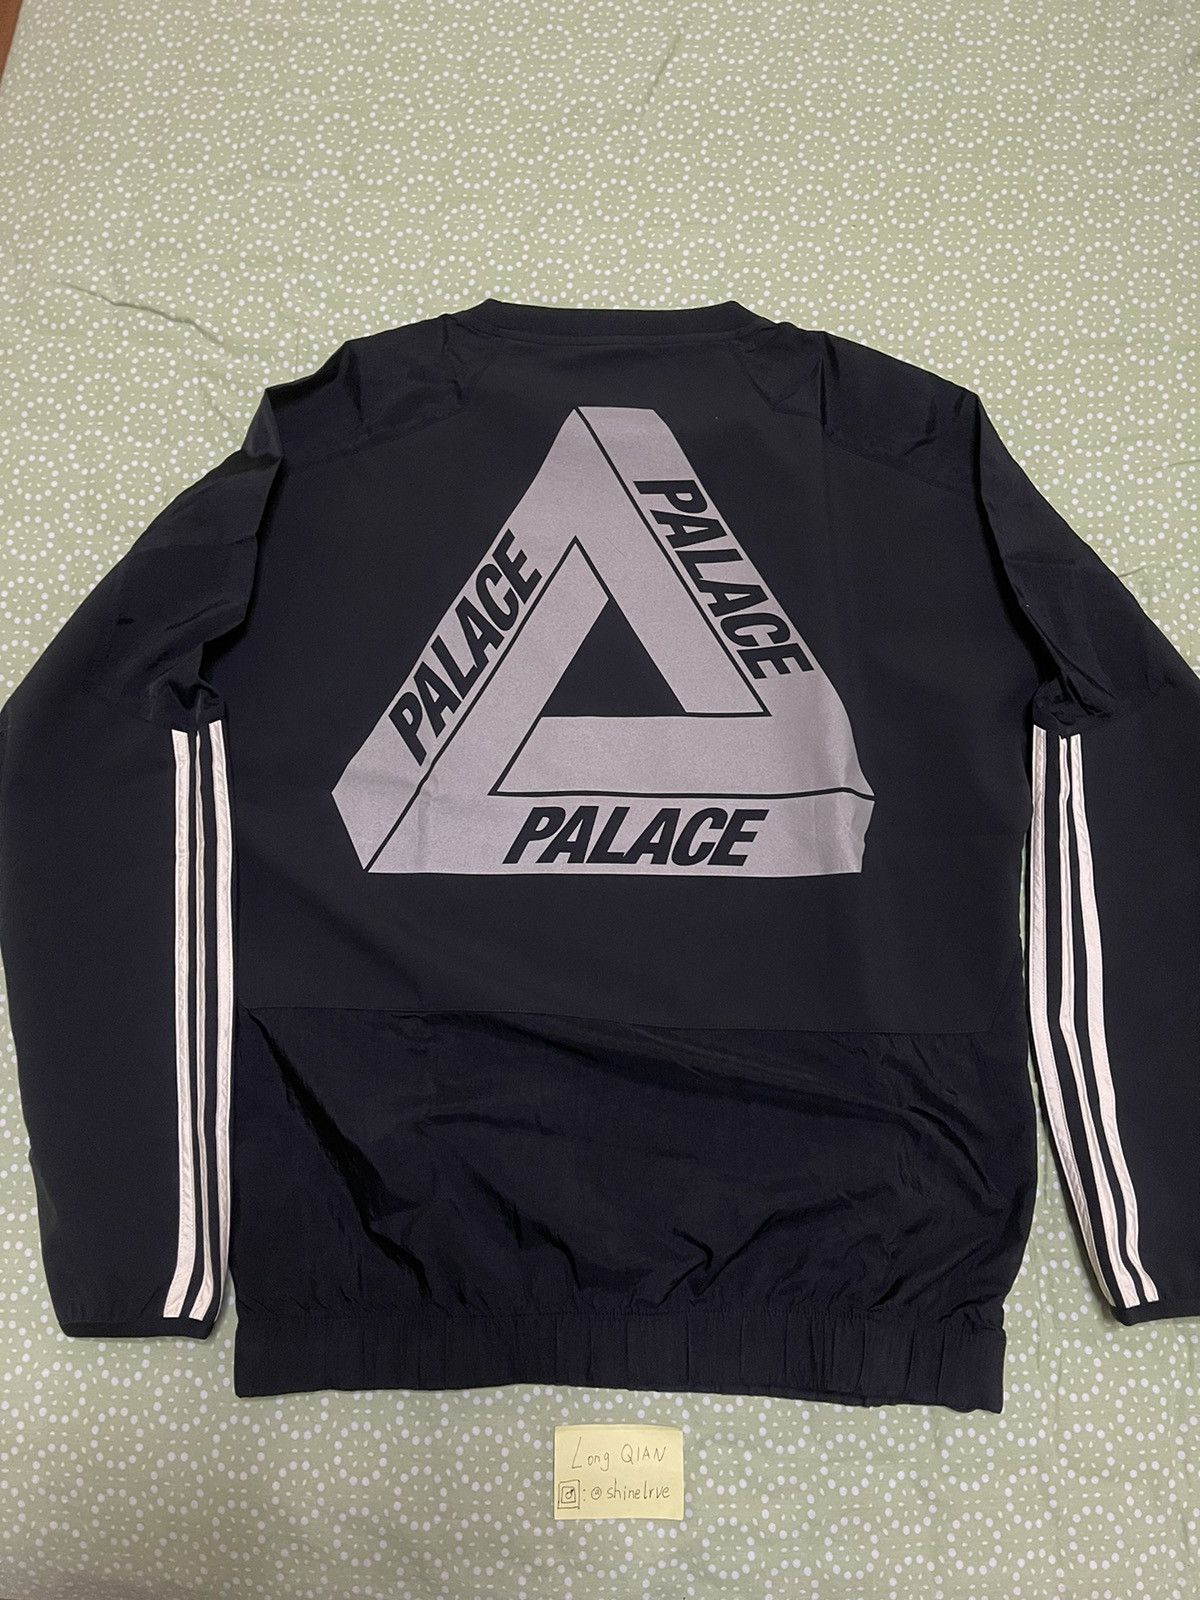 Adidas × Palace | Grailed